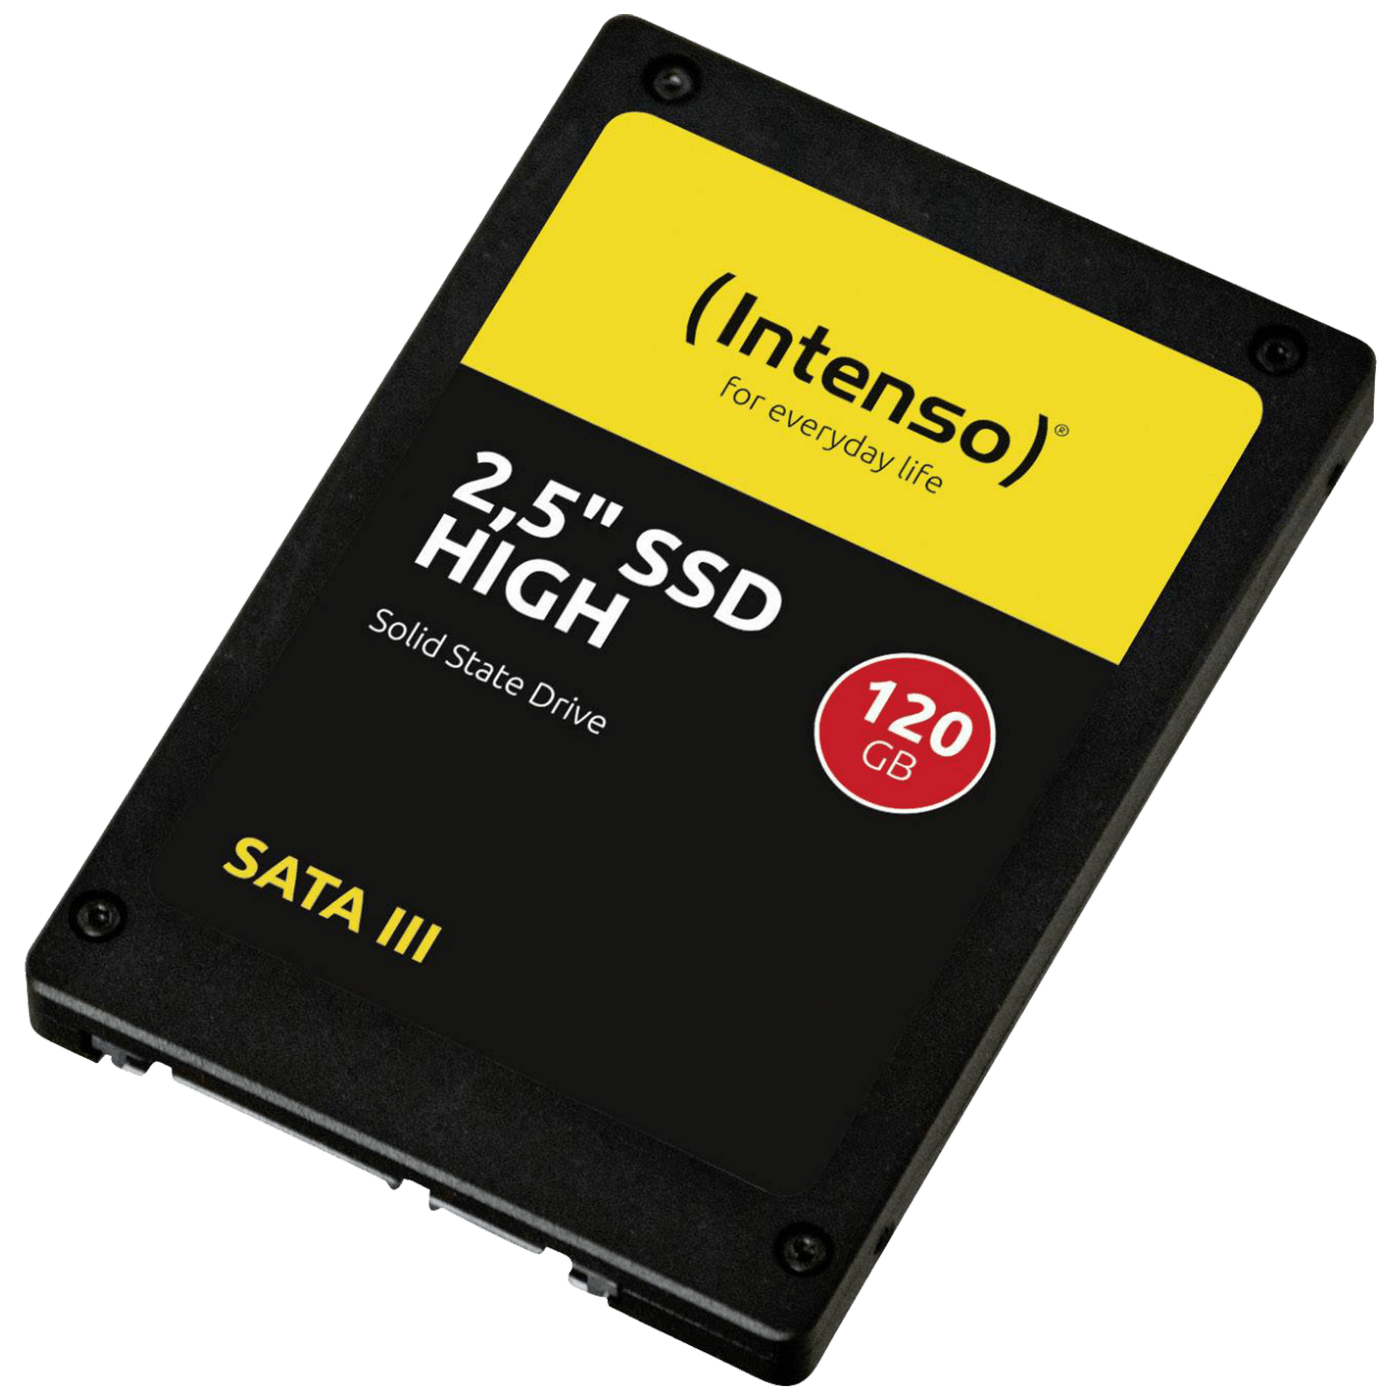 SSD-SATA3-120GB/High